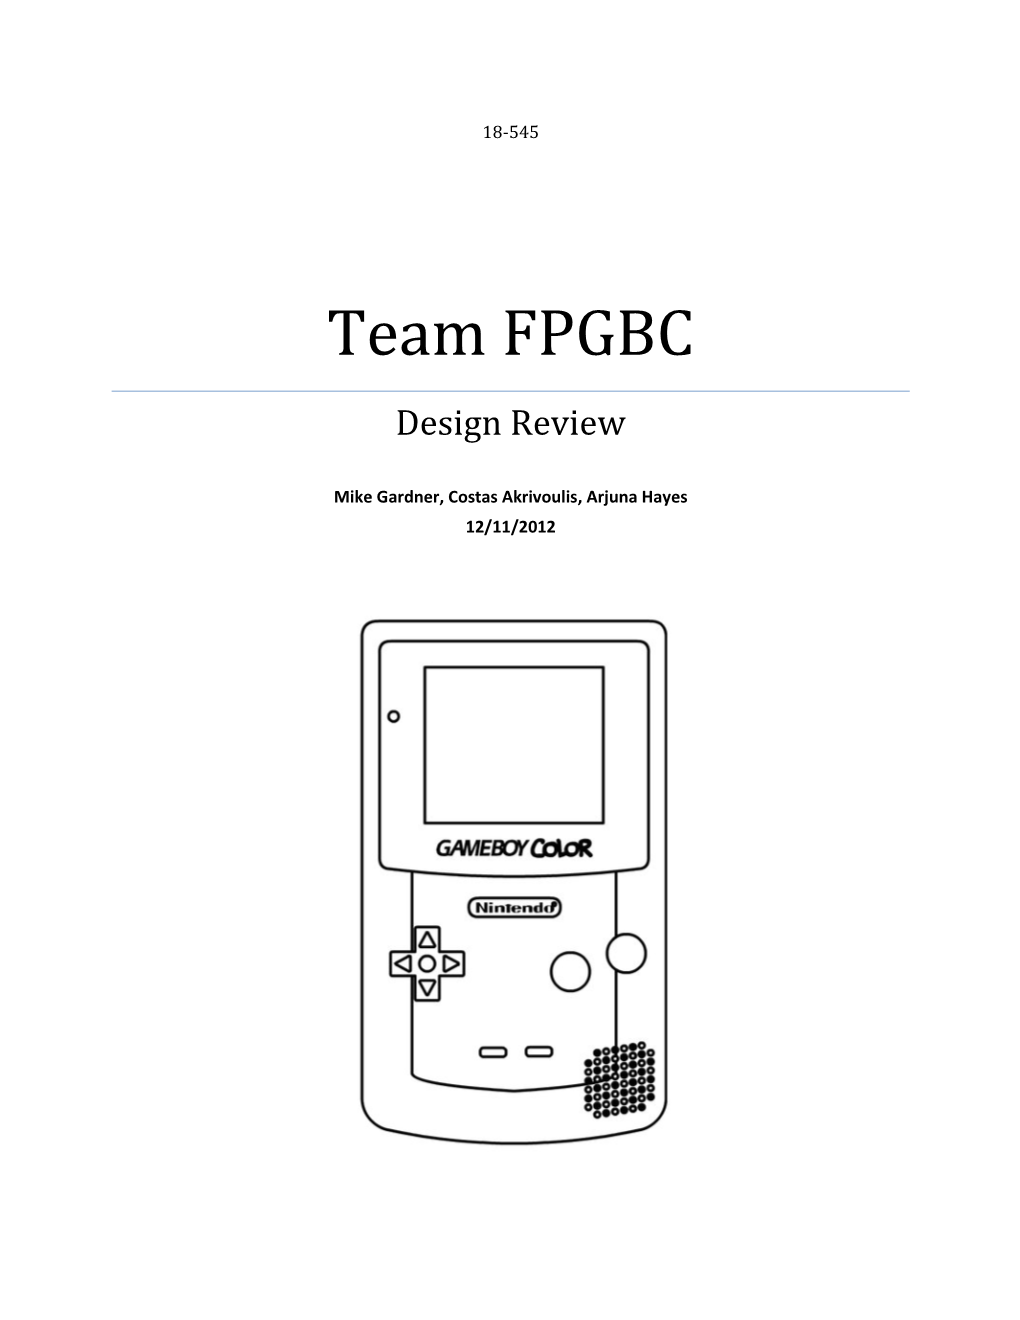 Team FPGBC Design Review